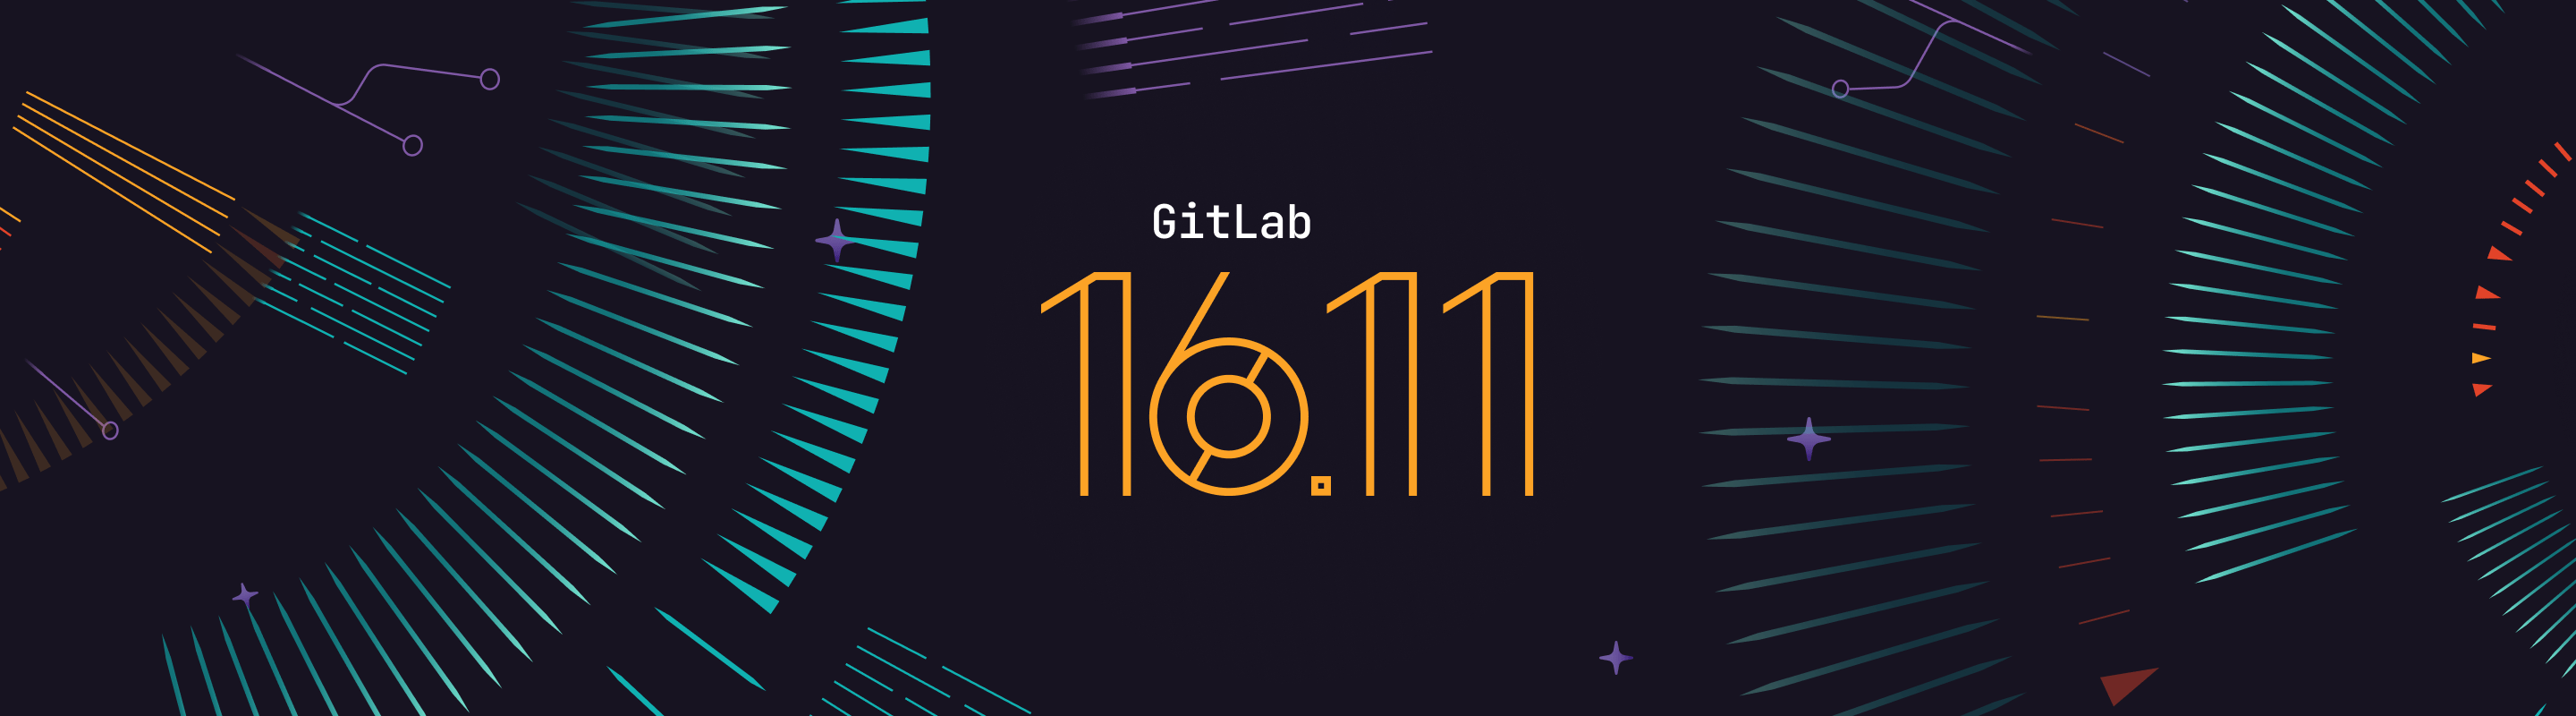 GitLab 16.11